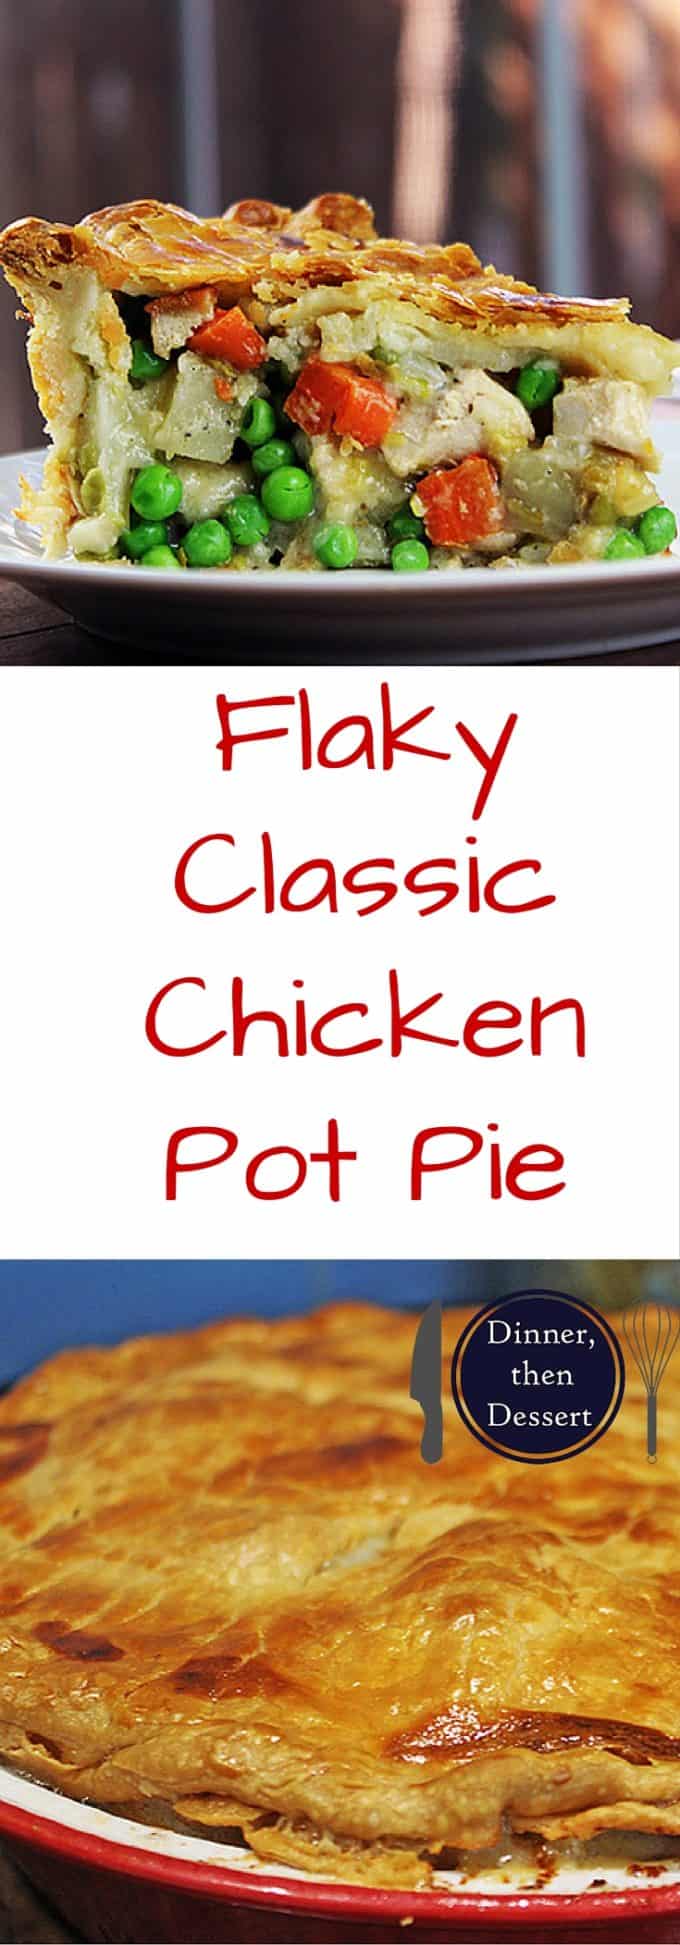 Classic Chicken Pot Pie {Flaky Crust!} - Dinner, then Dessert